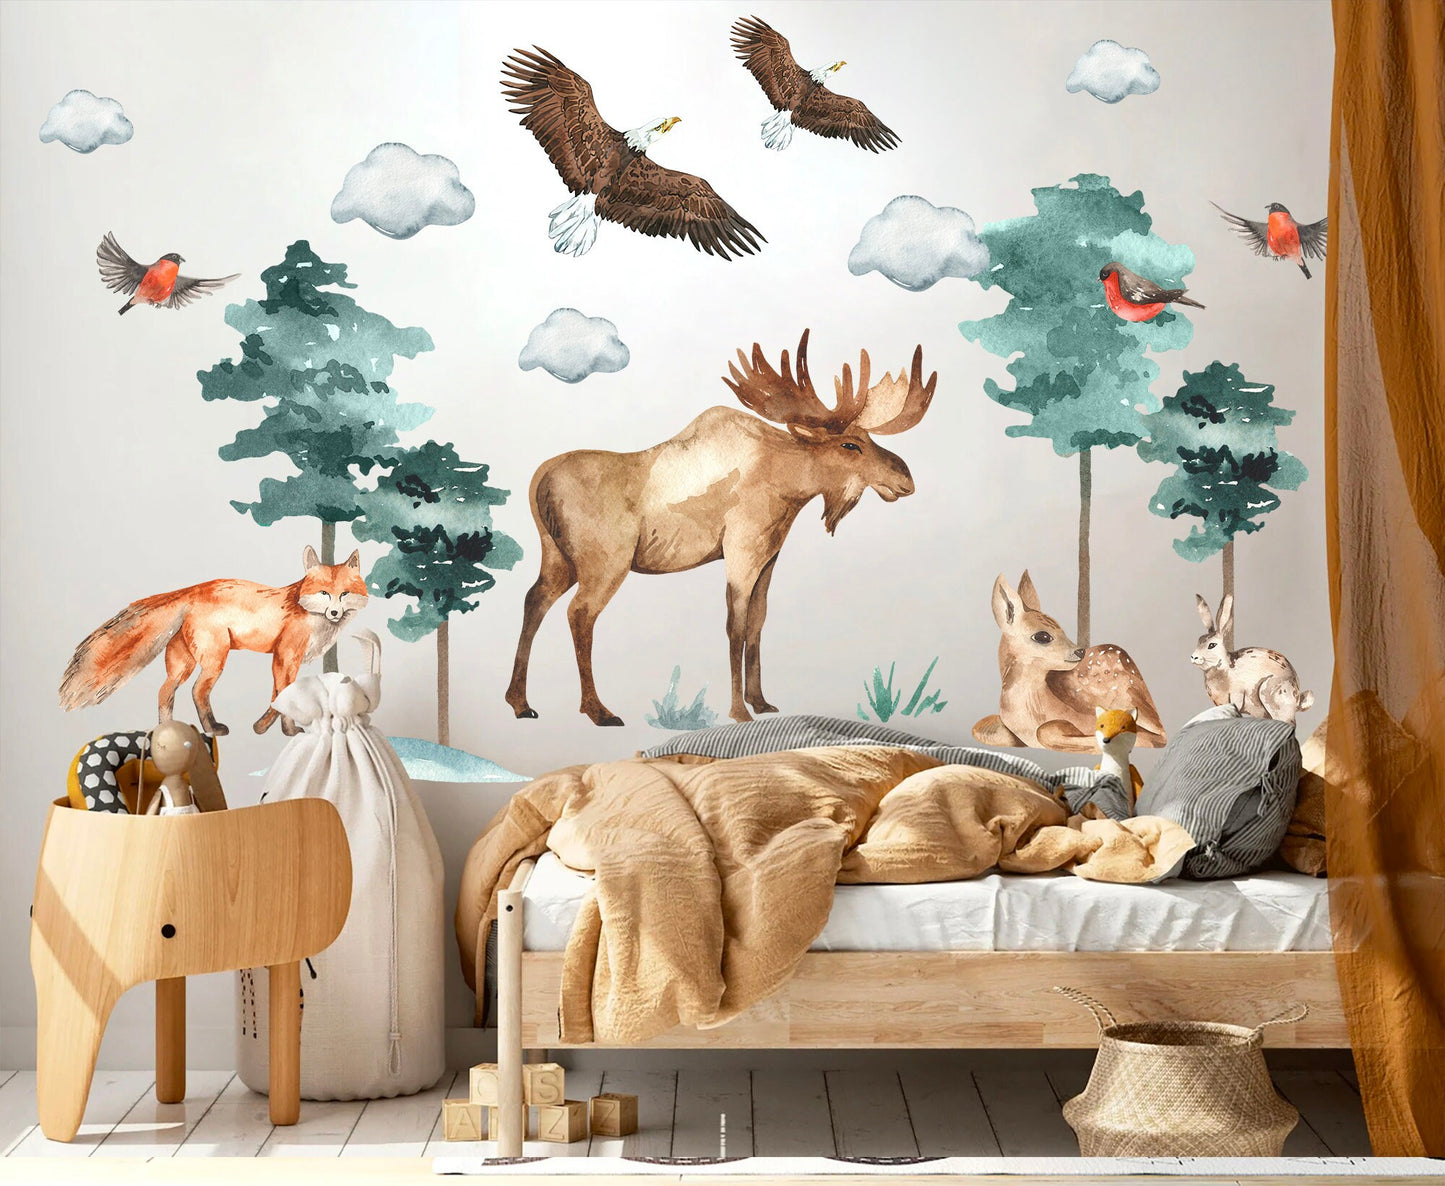 Forest Friends Wall Decal: Moose, Fox, Deer, Rabbit, Eagle, Bird in Woods - BR094